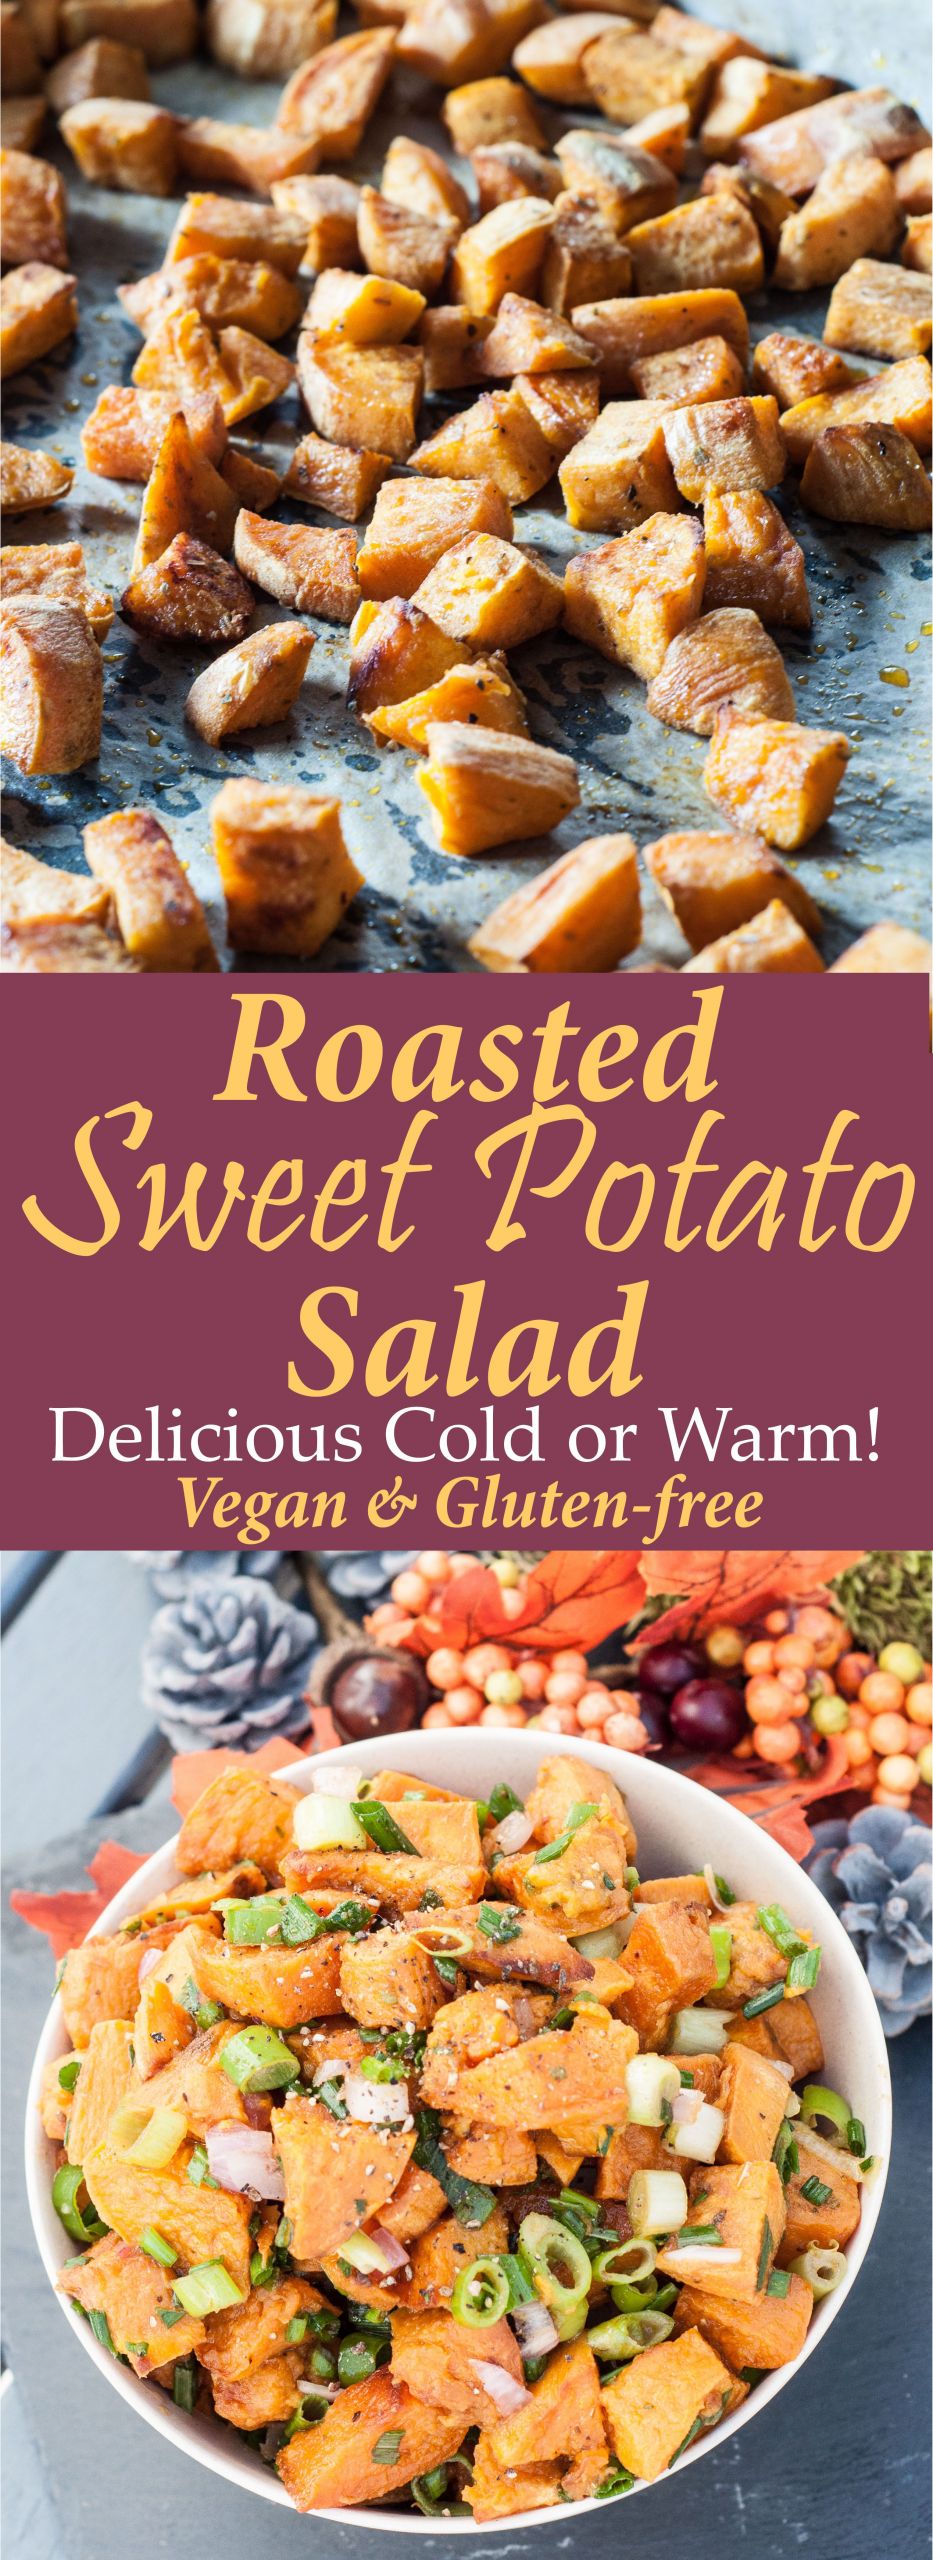 Make Ahead Roasted Sweet Potatoes
 Healthy Roasted Sweet Potato Salad Recipe great to make